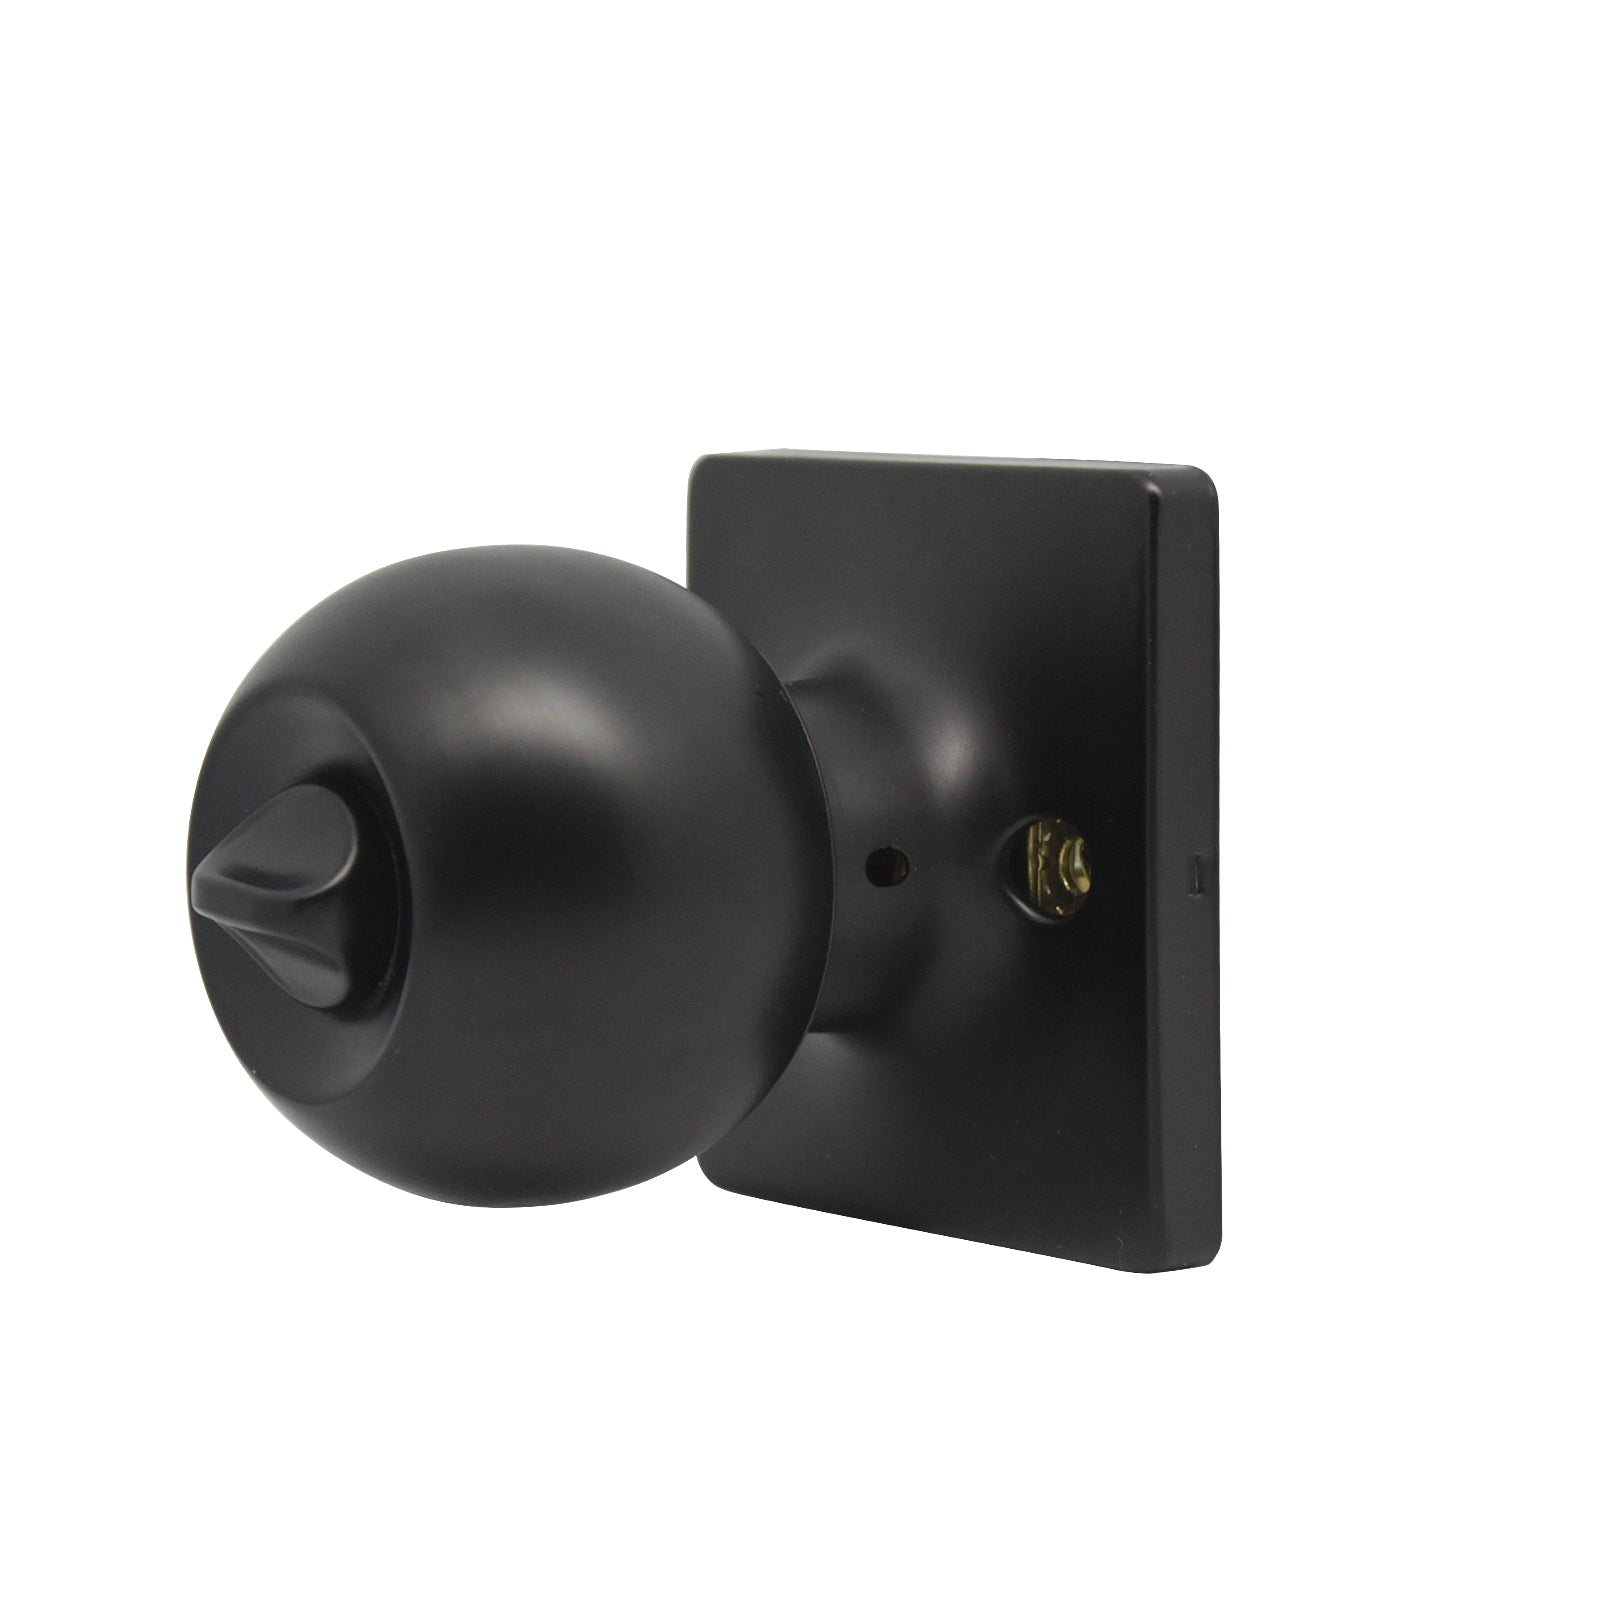 Round Ball Knob with Square Rosette, Interior Privacy Door Knobs Black DLS07BKBK - Probrico